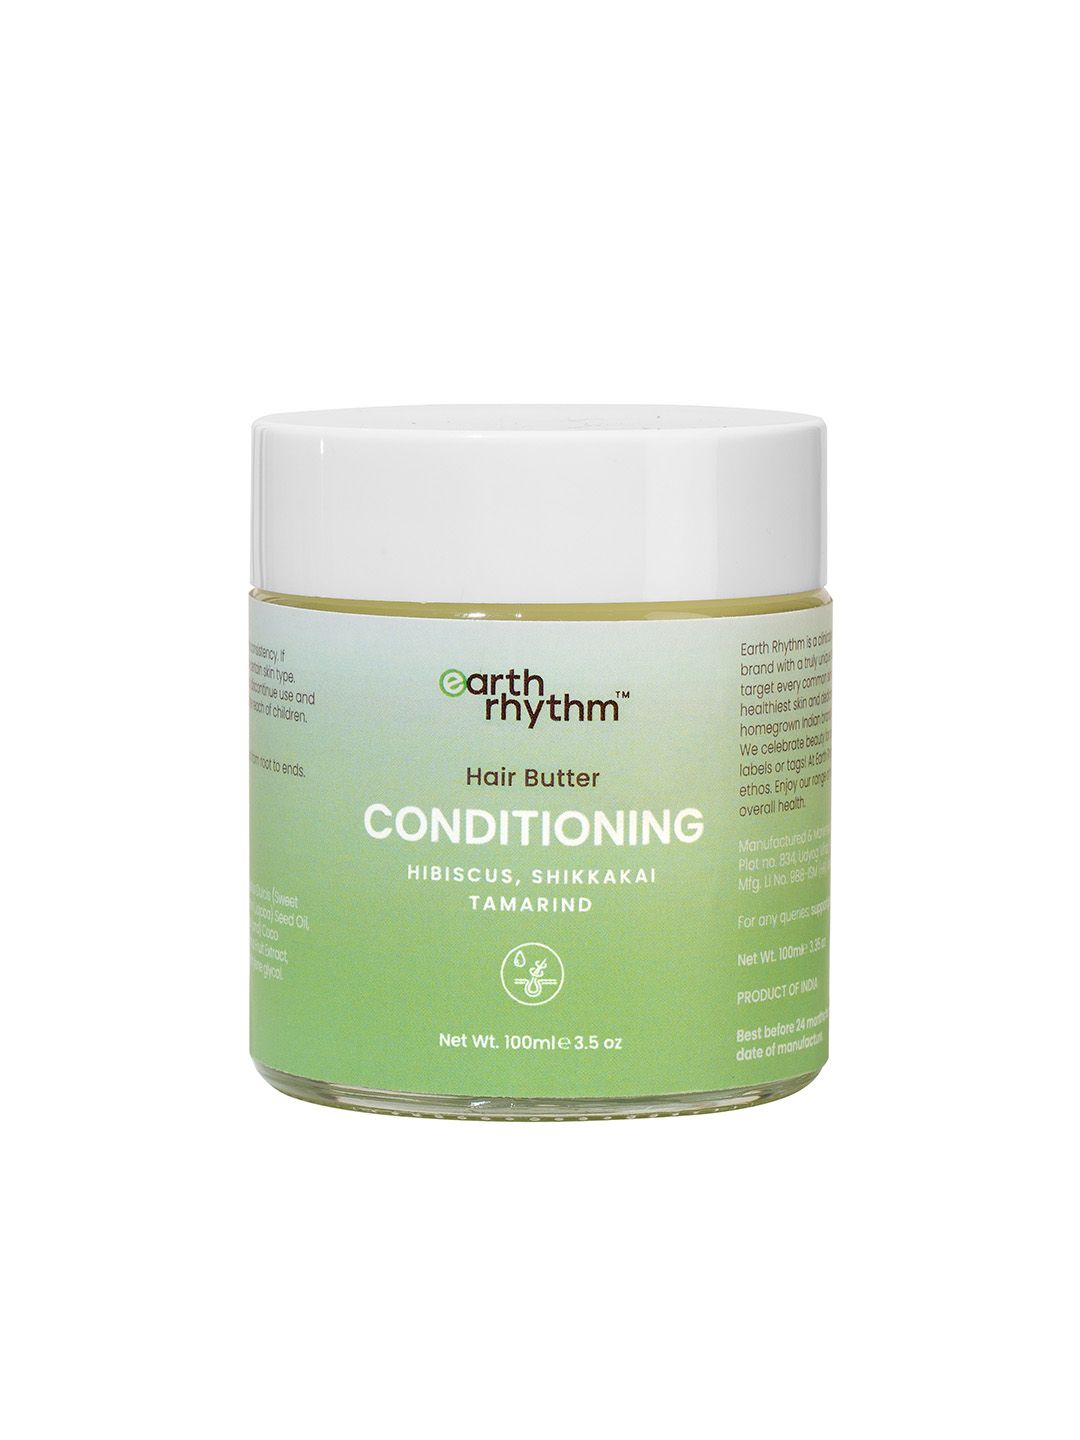 Earth Rhythm Conditioning hair butter Hibiscus Shikakai &Tamarind 100ml Price in India